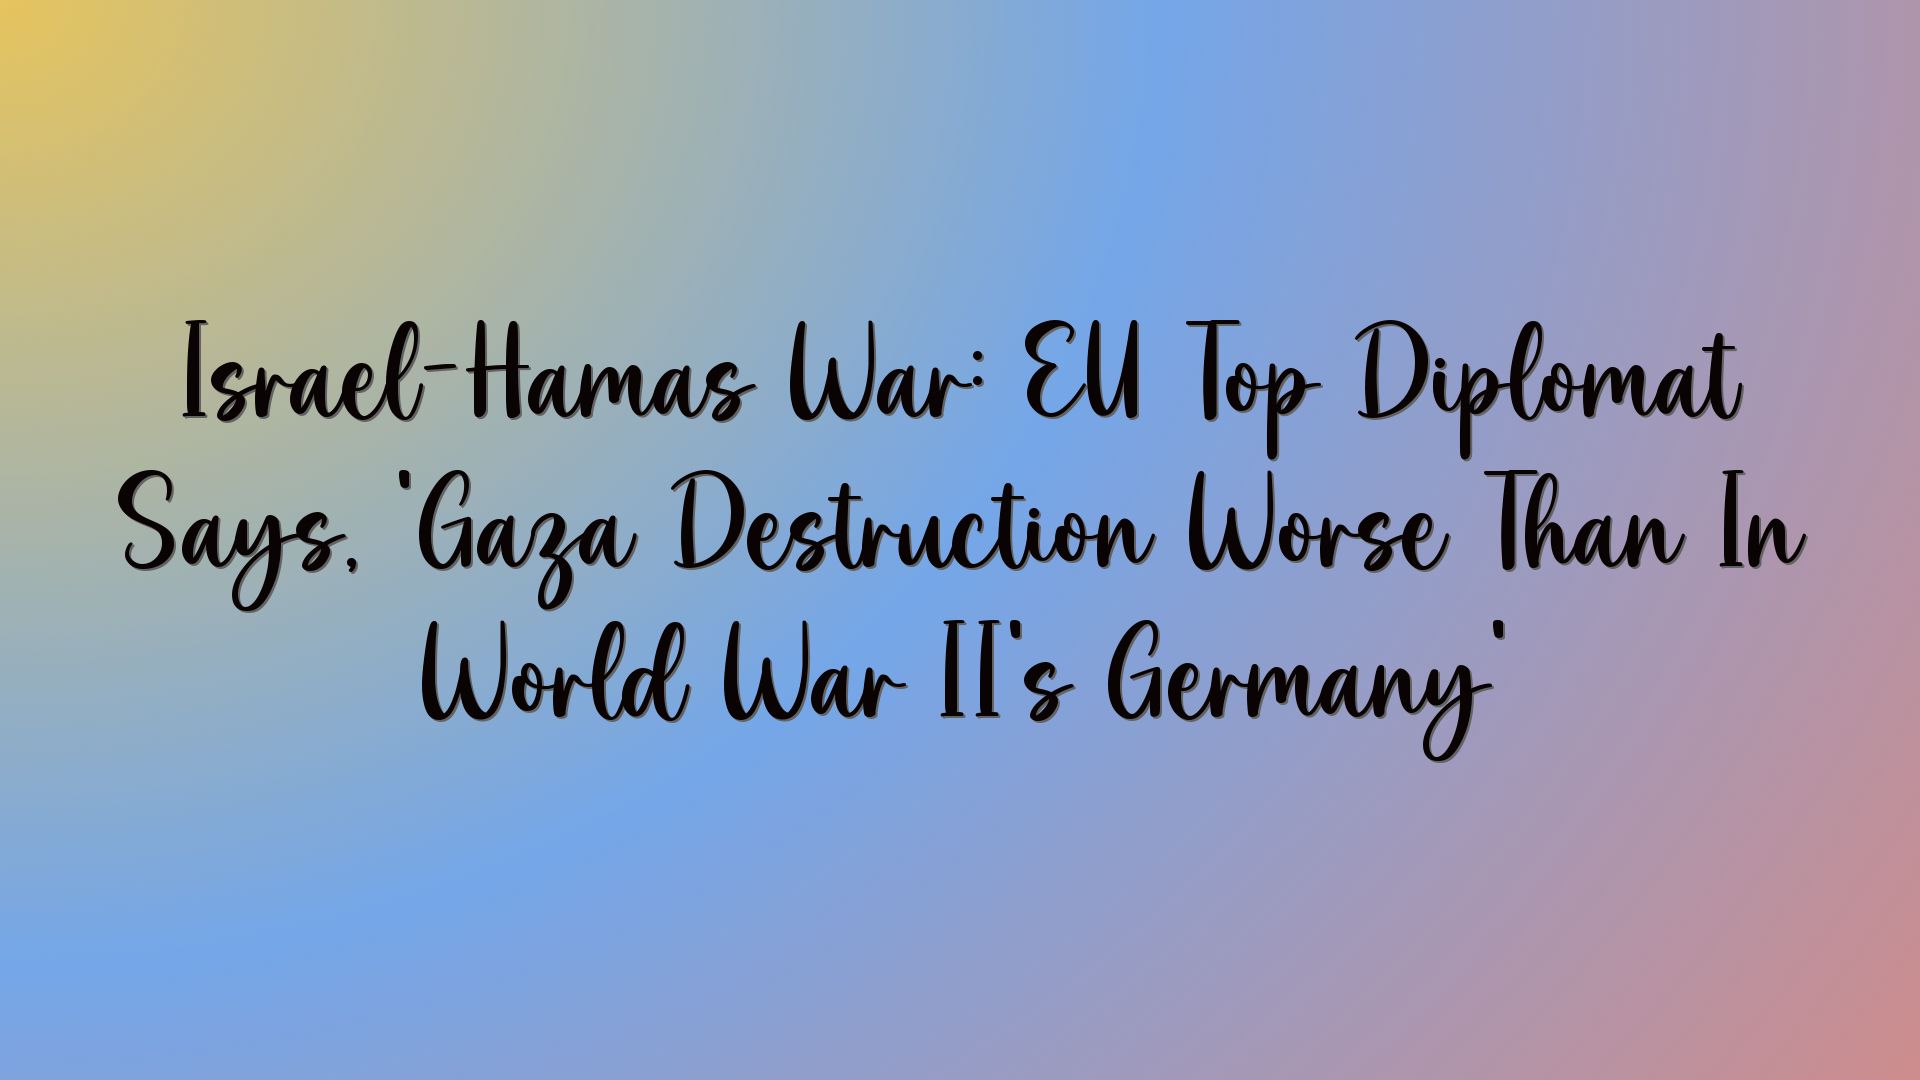 Israel-Hamas War: EU Top Diplomat Says, ‘Gaza Destruction Worse Than In World War II’s Germany’